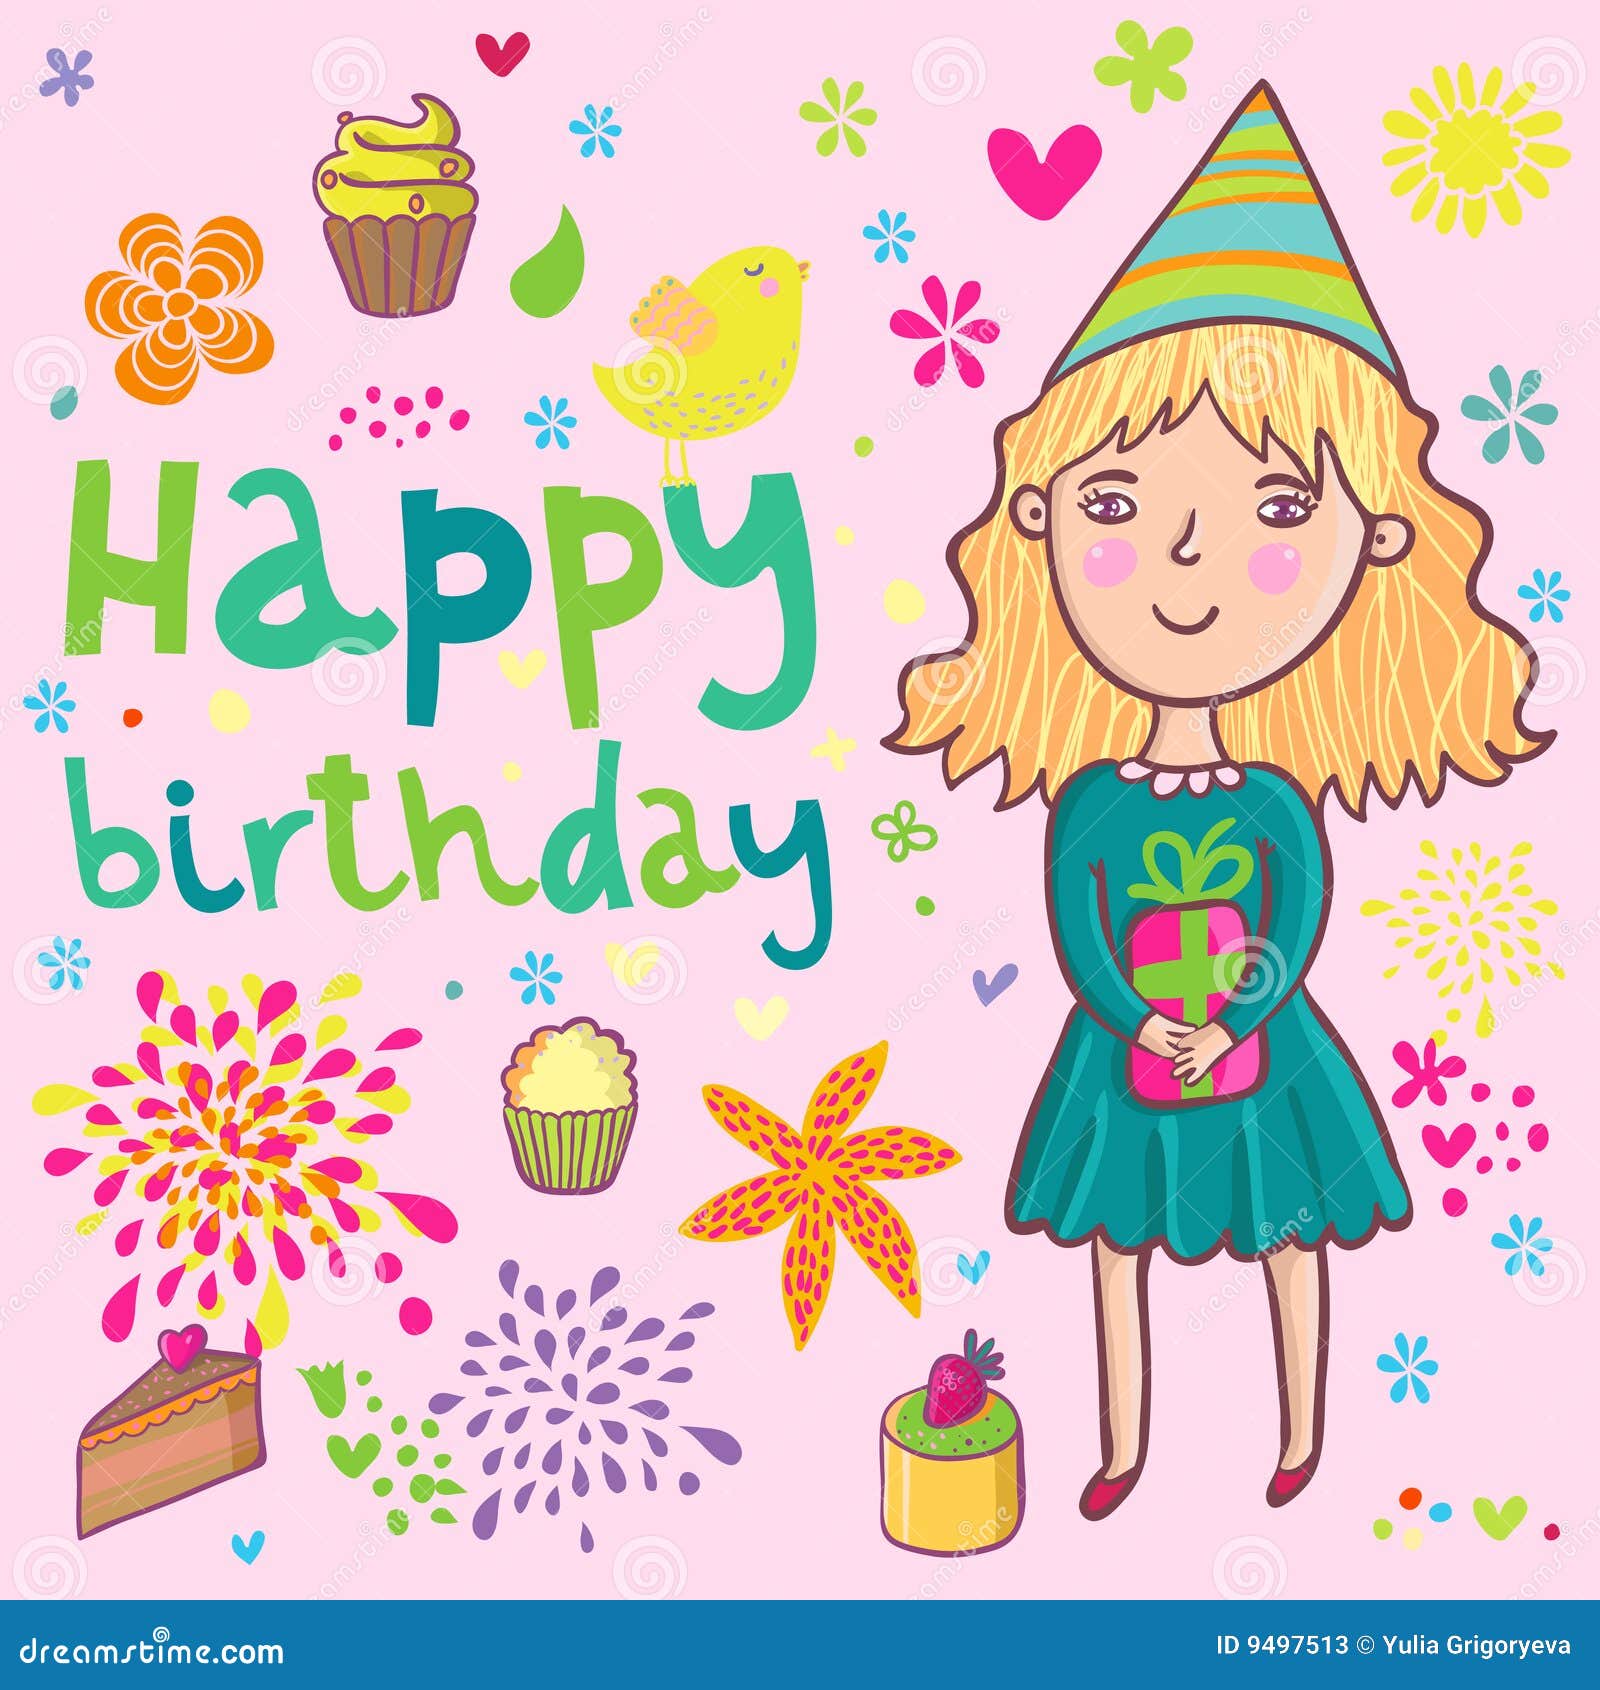 Girls birthday stock illustration. Illustration of happiness - 9497513